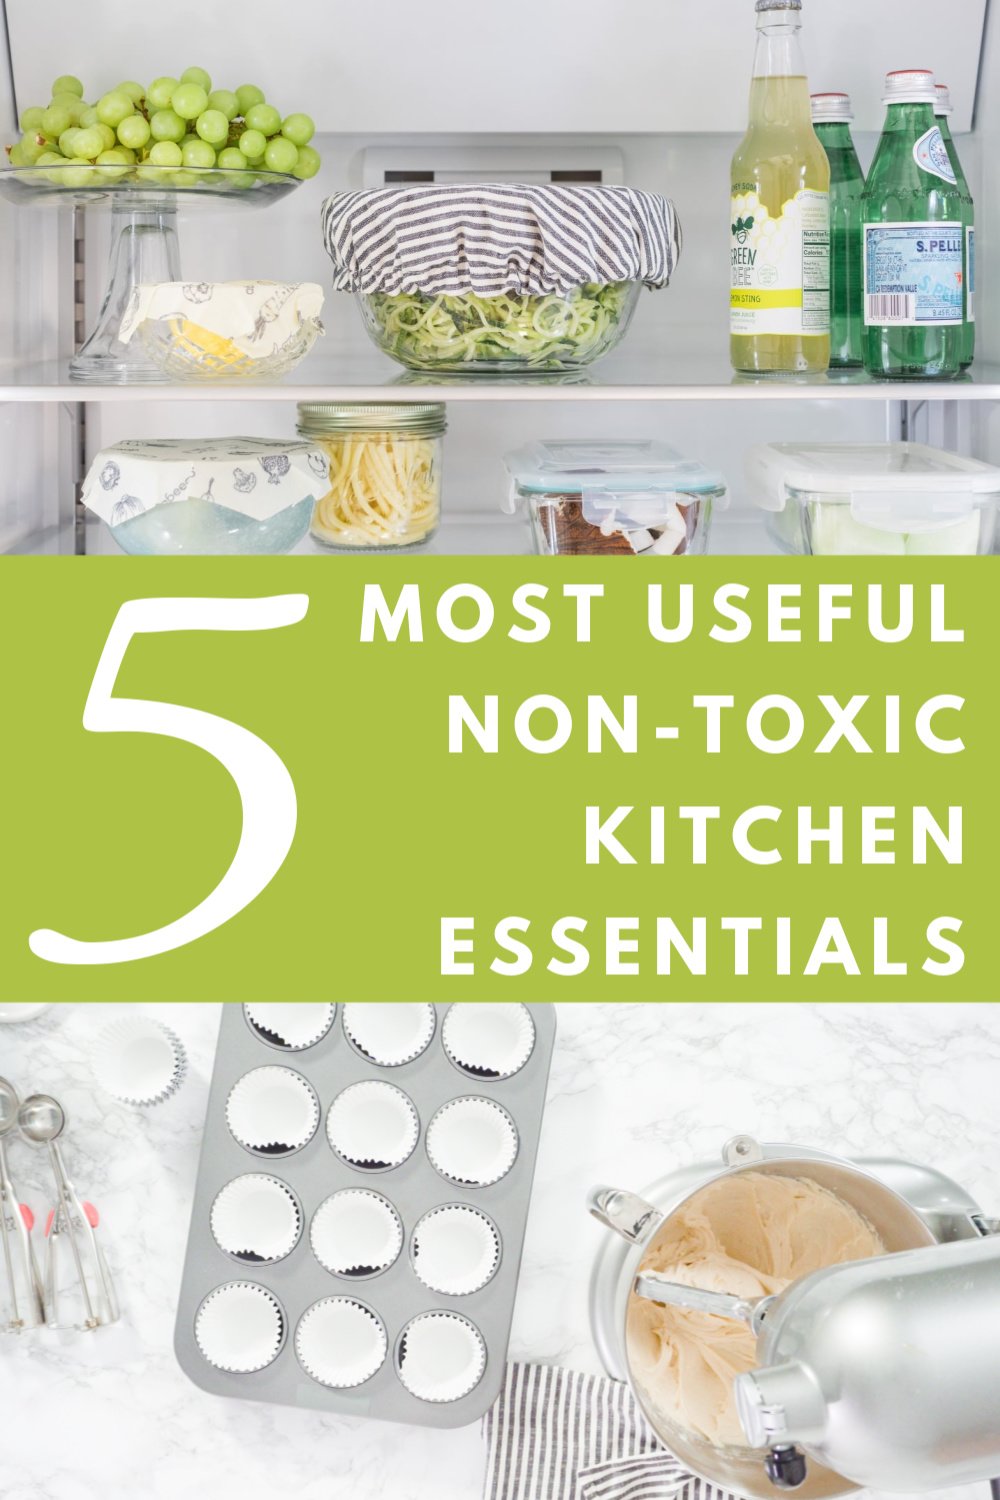 https://www.greenchildmagazine.com/wp-content/uploads/2017/06/Healthy-Kitchen-Essentials-Best-Non-Toxic-Most-Practical-Kitchen-Tools.jpg